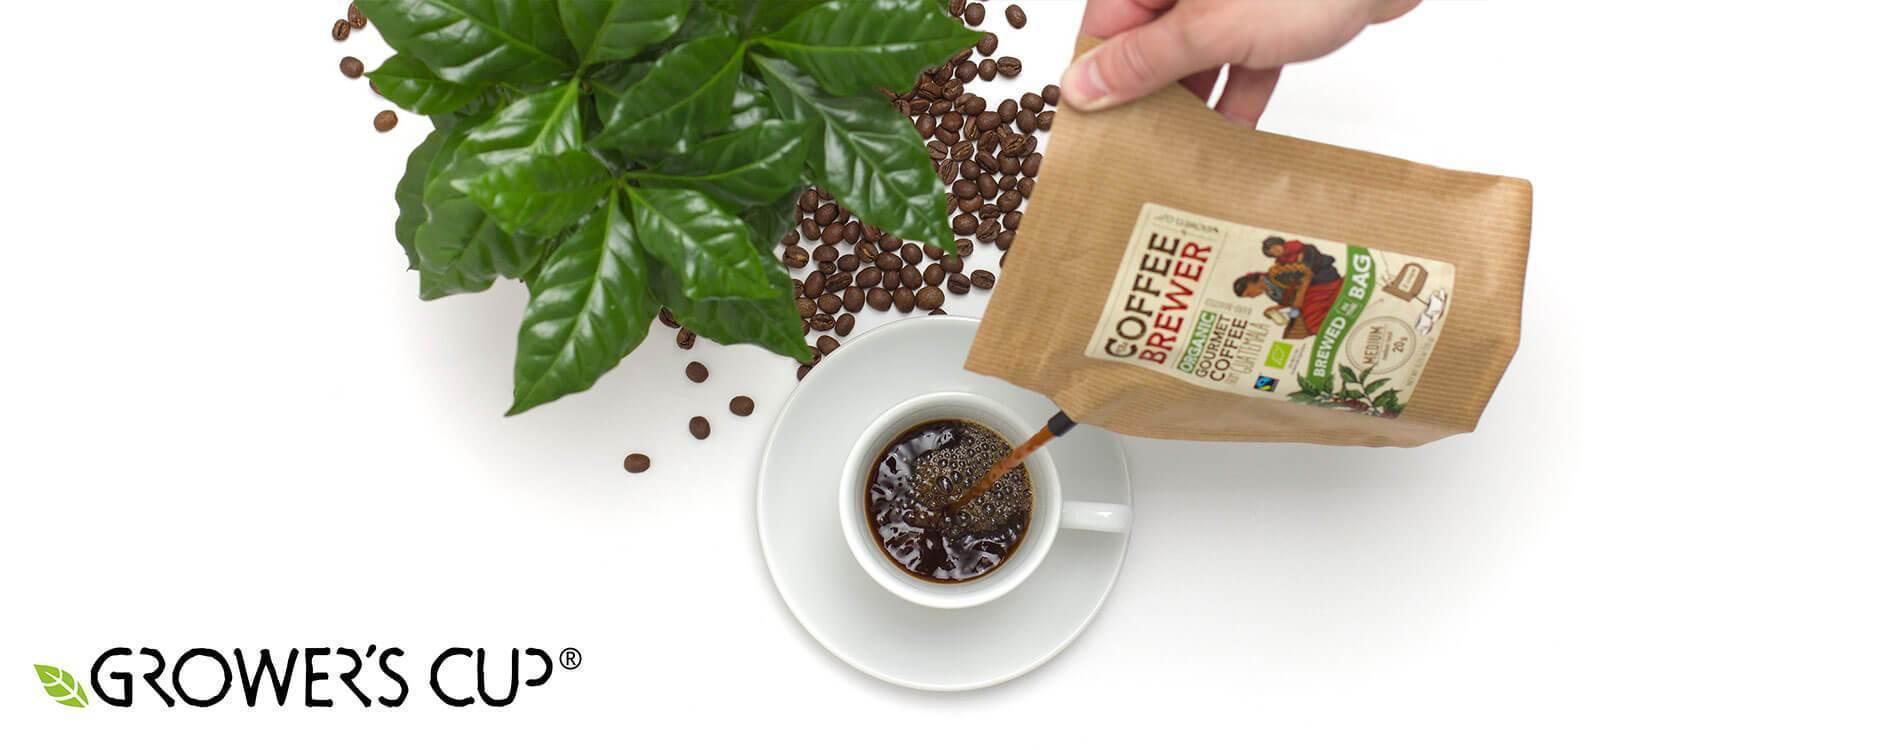 Growers Cup - Brygg fantastiskt kaffe, i en påse! - TacNGear